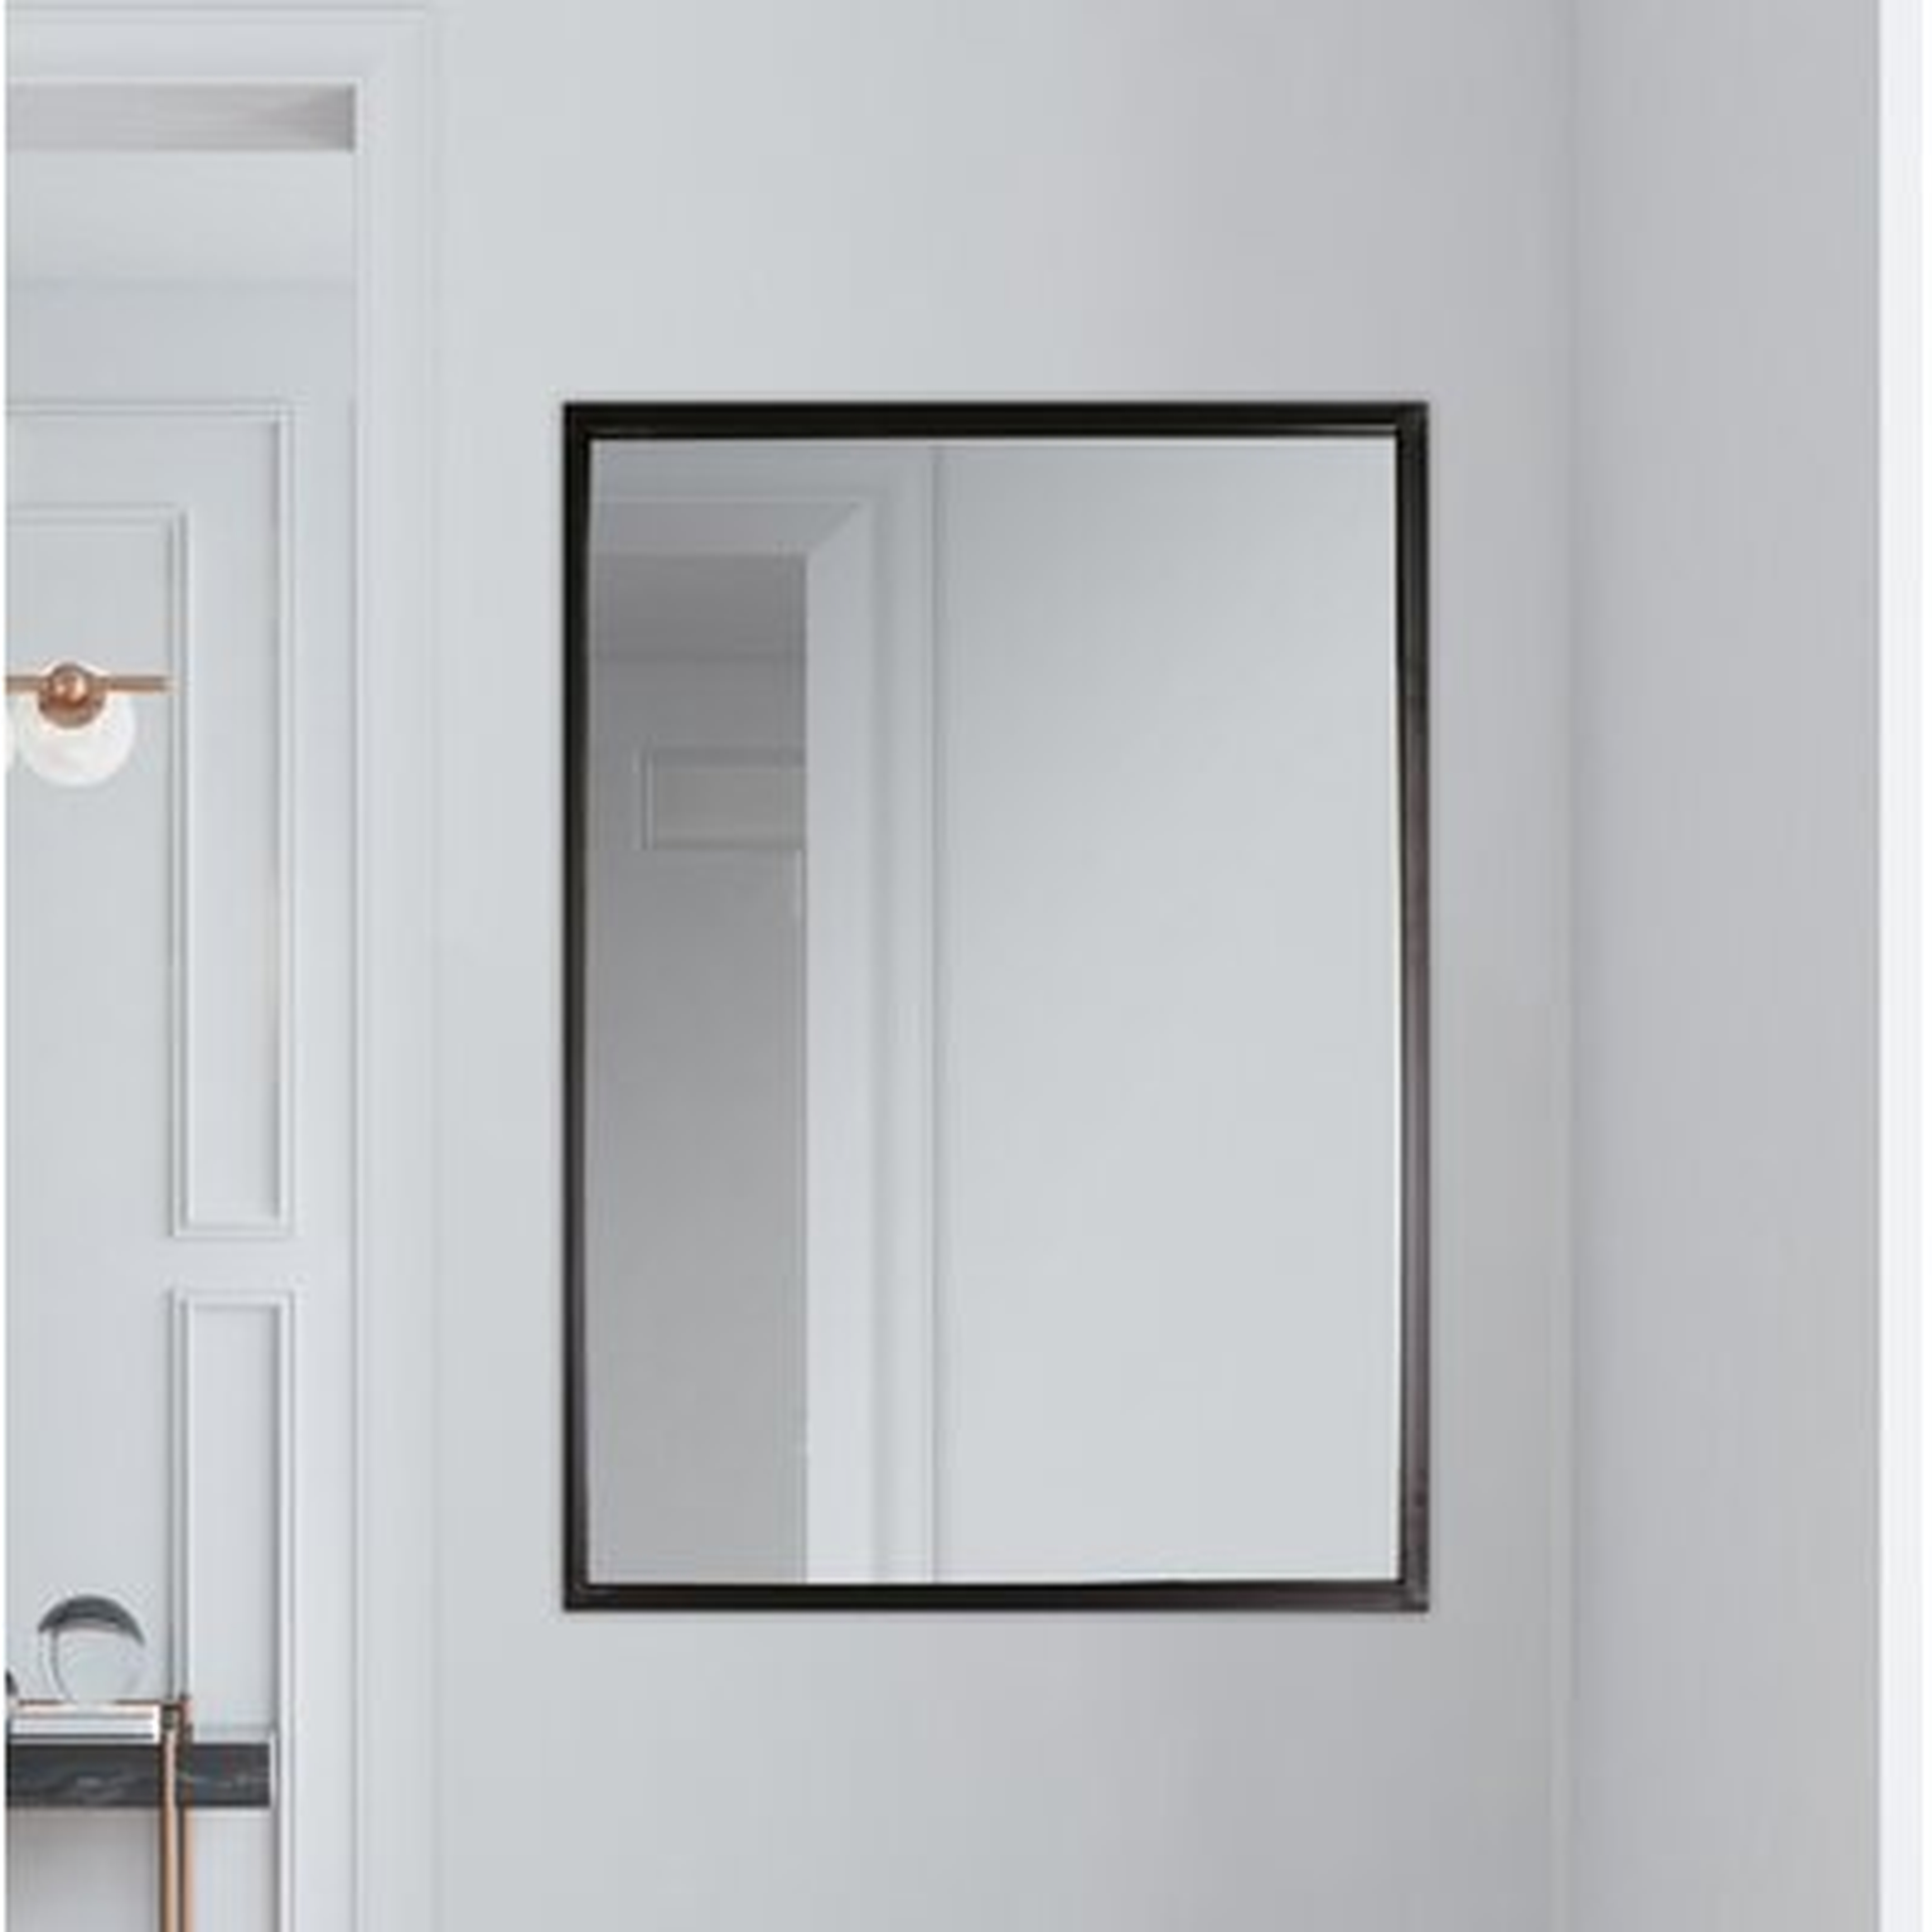 35"X24" Framed Vanity Wall Mirror Black Rectangle Hanging Modern Industrial Large Long Metal Mirrors For Bathroom Entryway - Wayfair